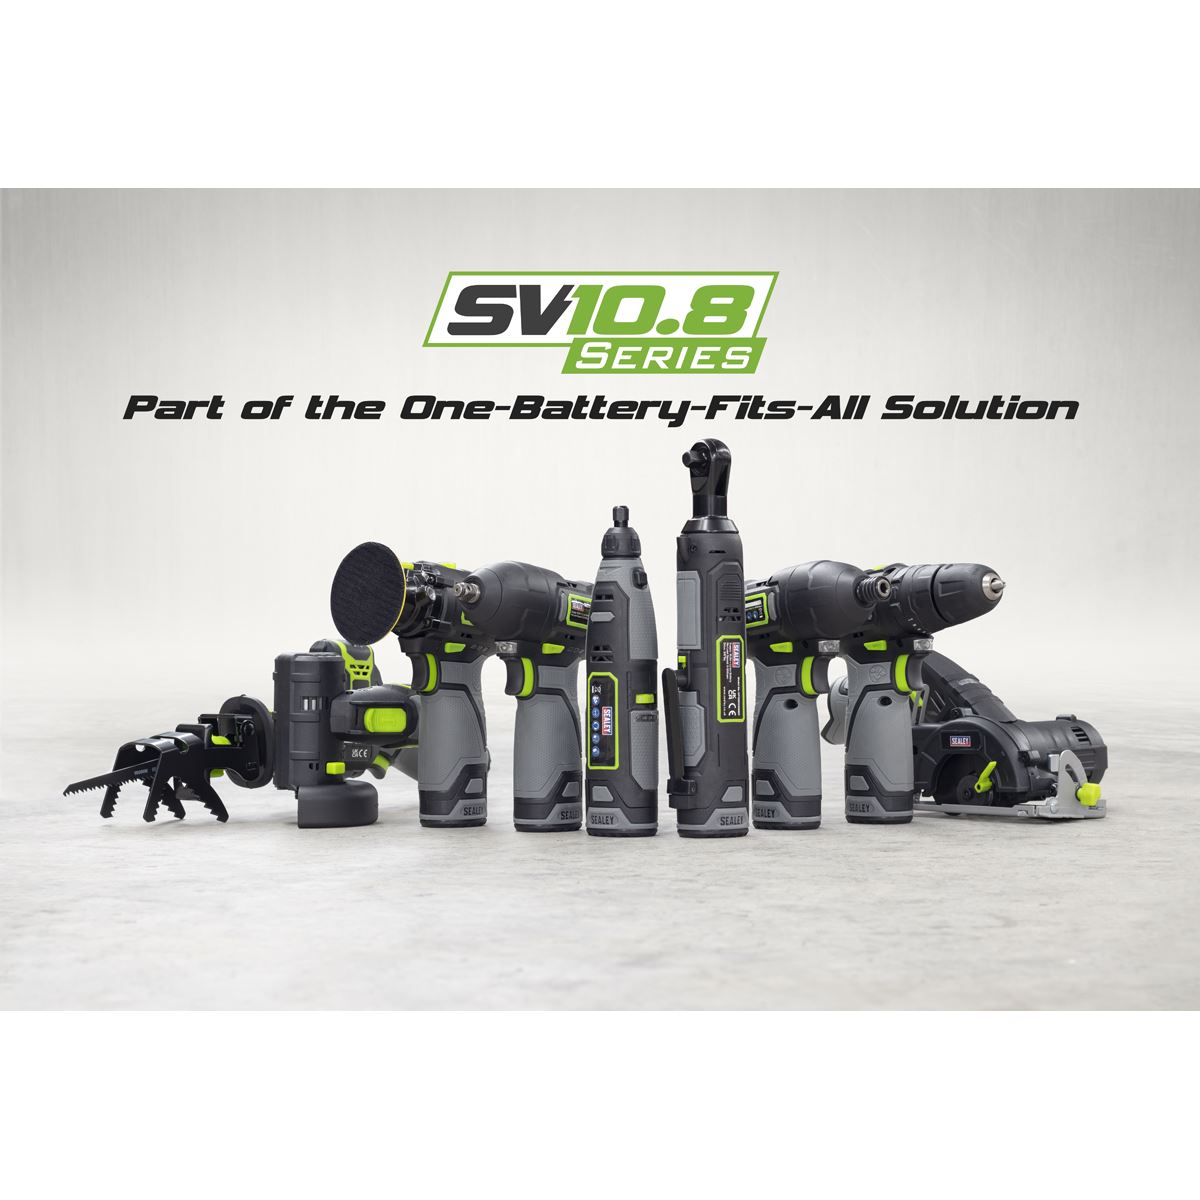 Sealey 2 x 10.8V SV10.8 Series Rotary Hammer Drill & Impact Driver Kit